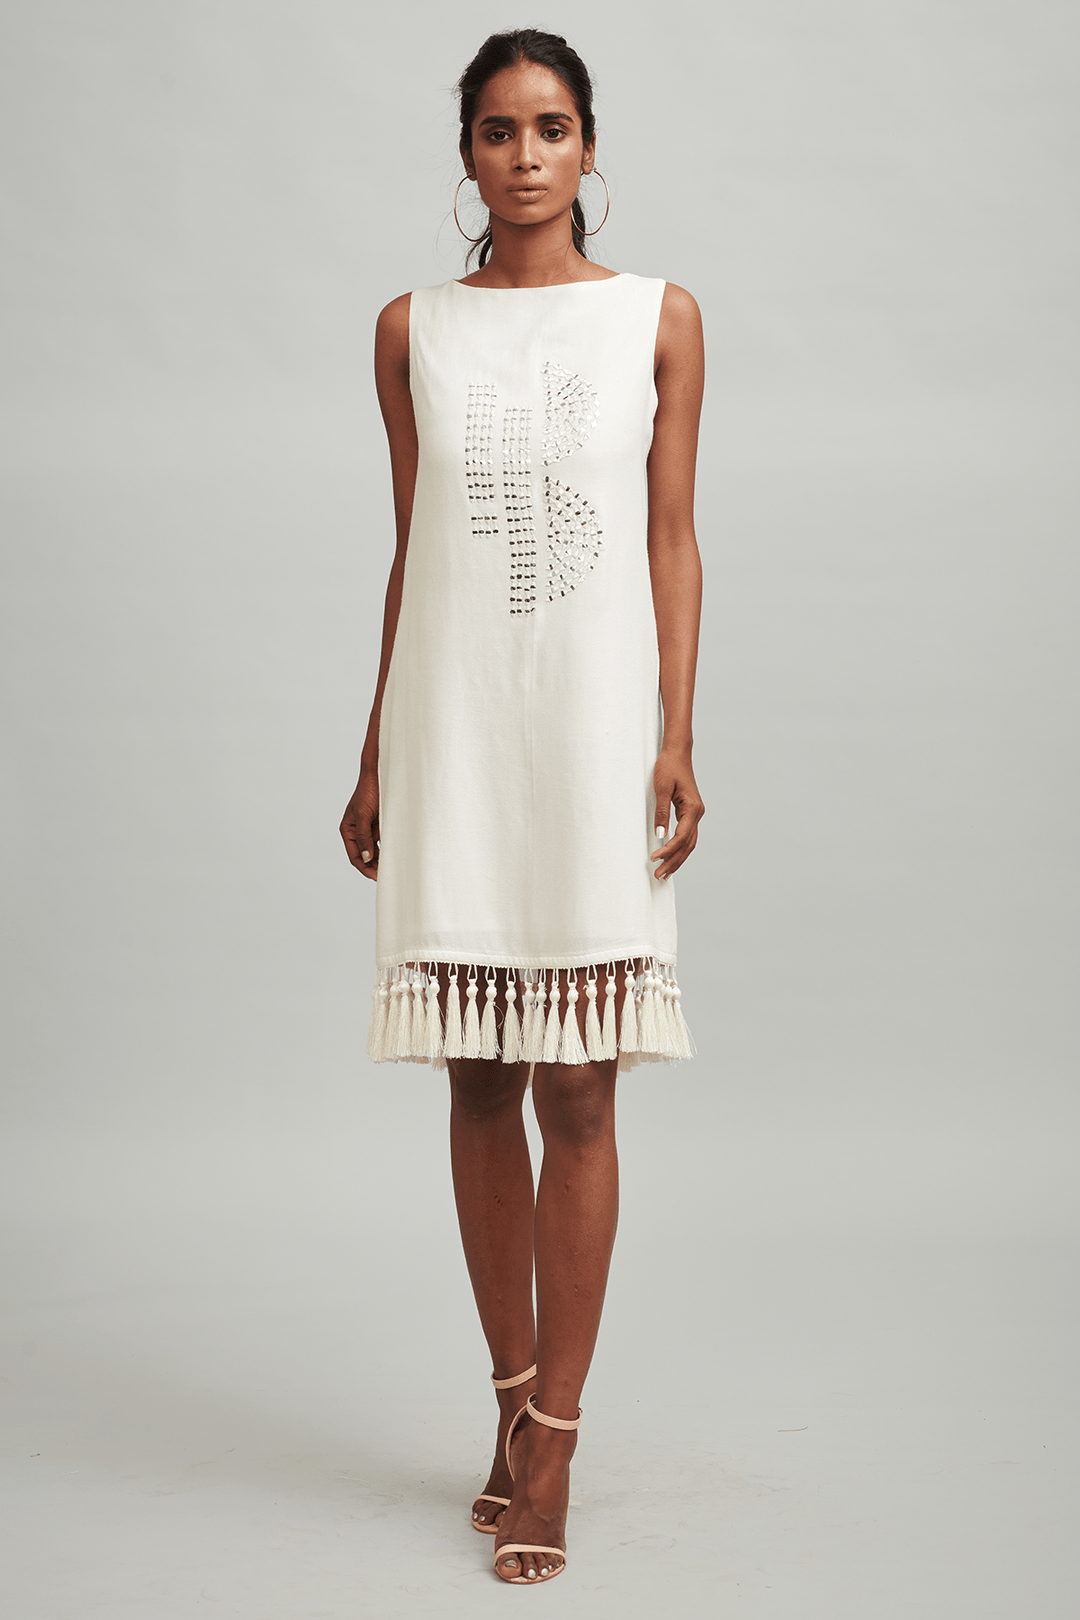 Mirror Motif Tassle Dress, a product by Dash & Dot